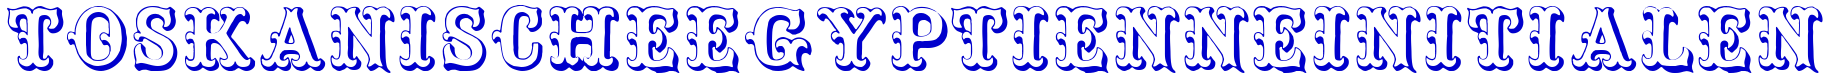 ToskanischeEgyptienneInitialen шрифт